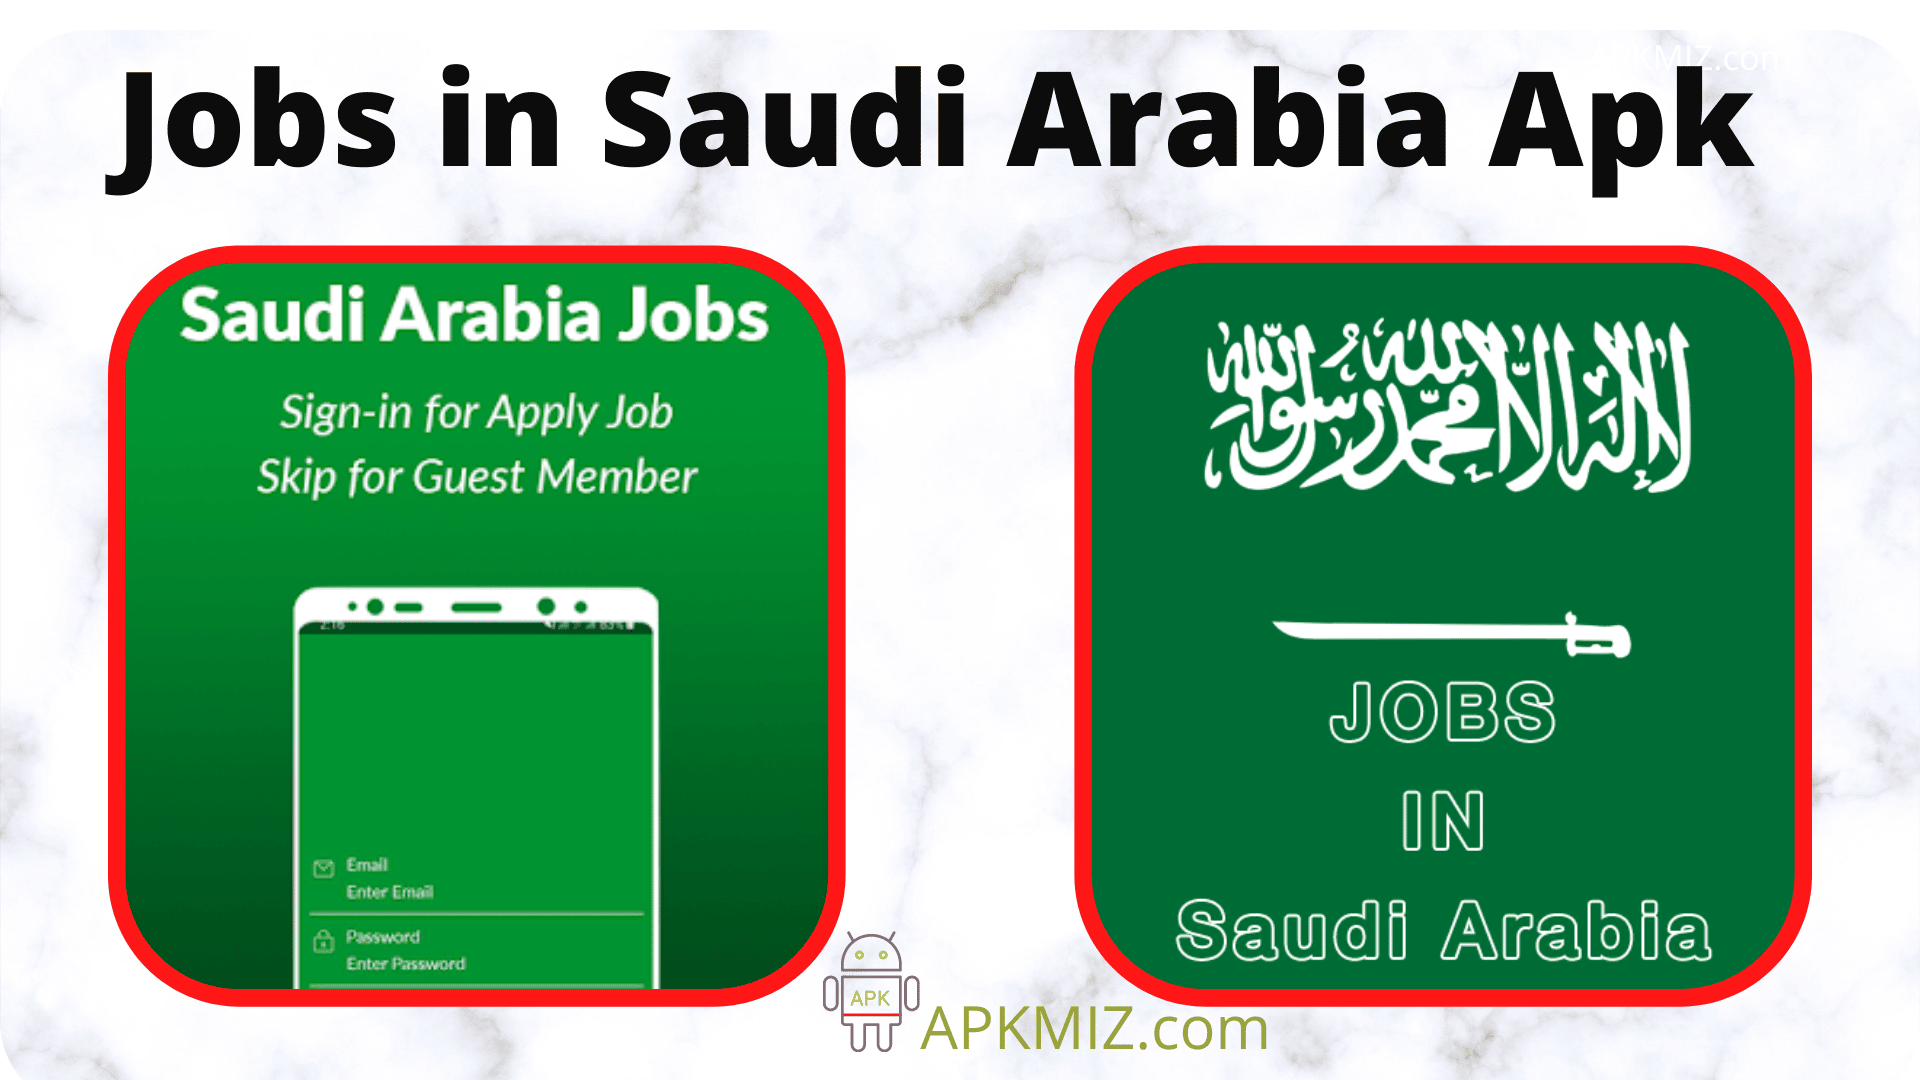 Jobs in Saudi Arabia Apk